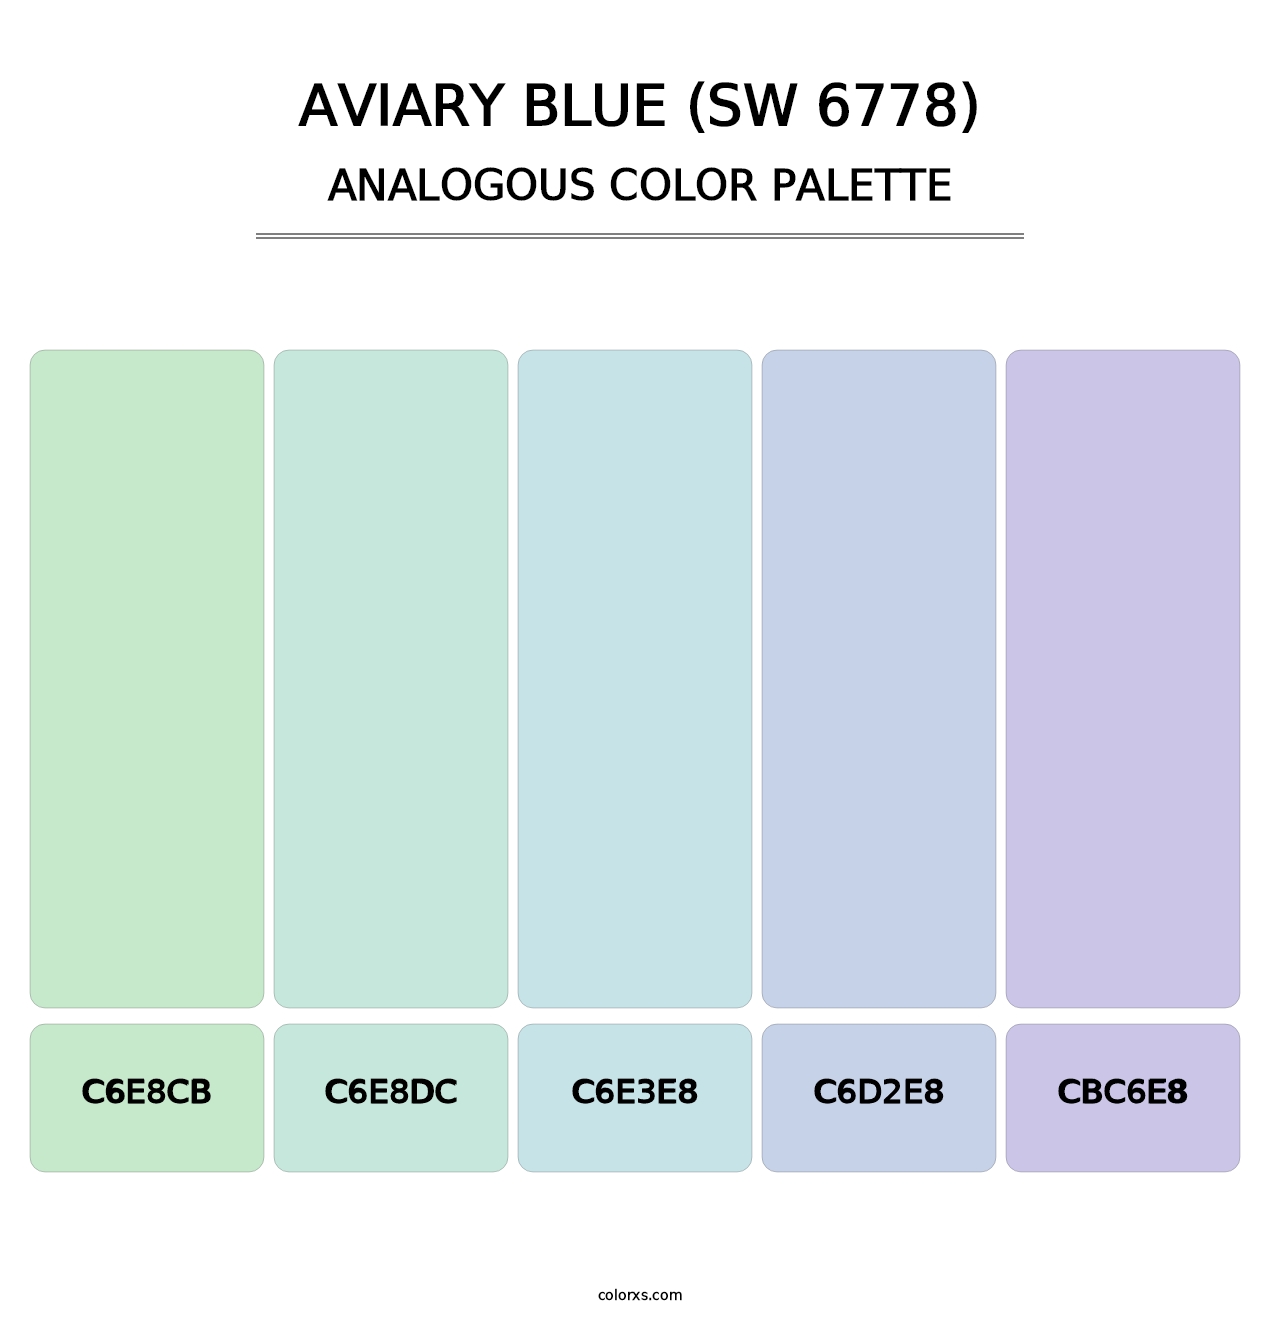 Aviary Blue (SW 6778) - Analogous Color Palette